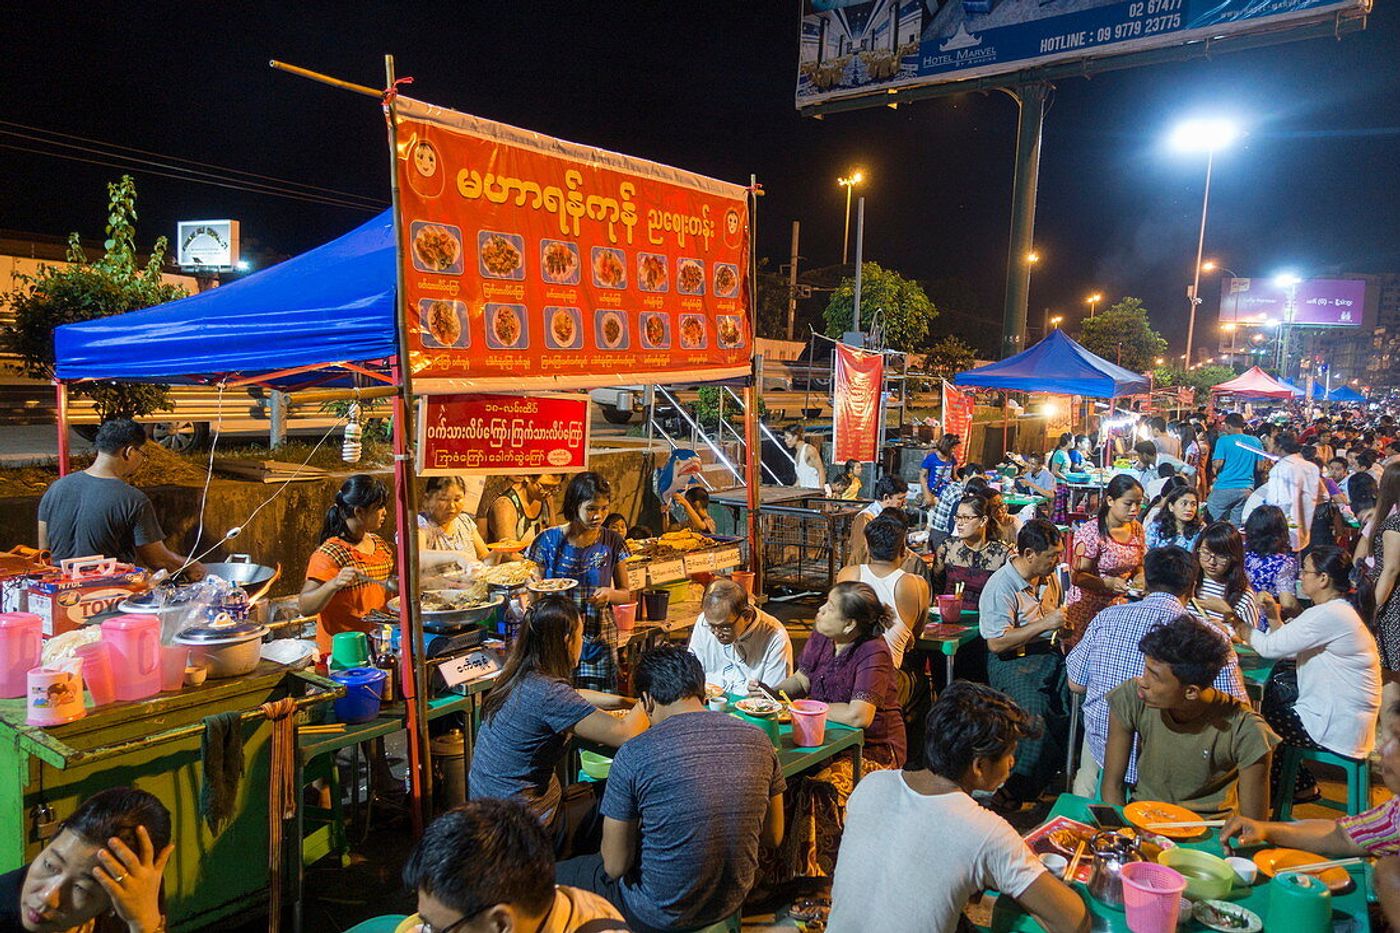 Night Market on Strand Road